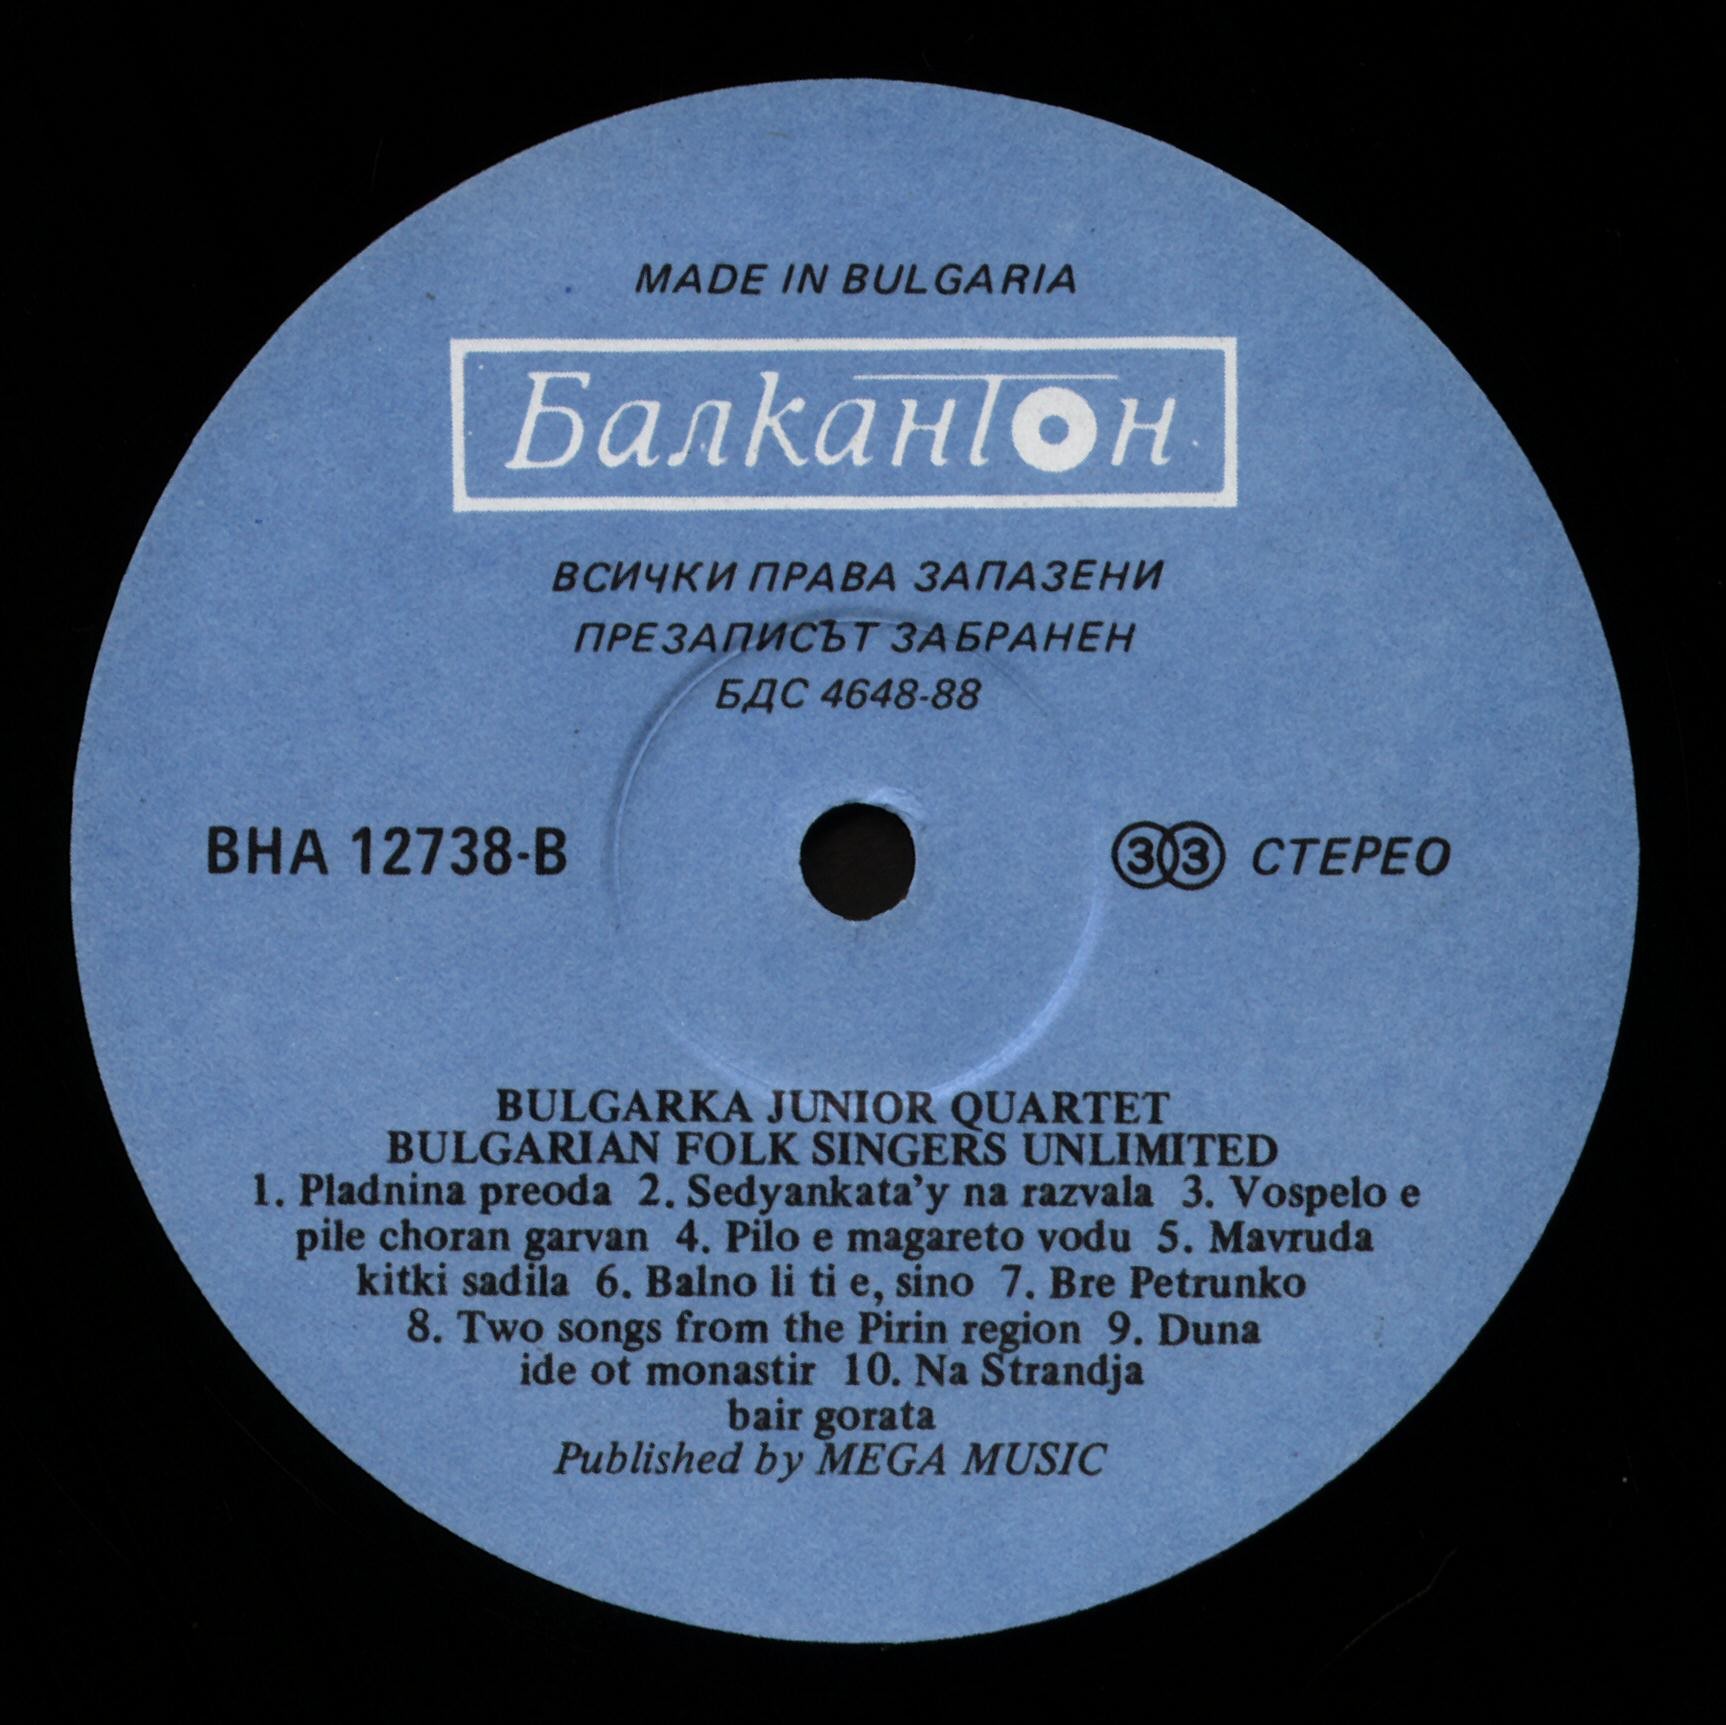 Bulgarka Junior Quartet